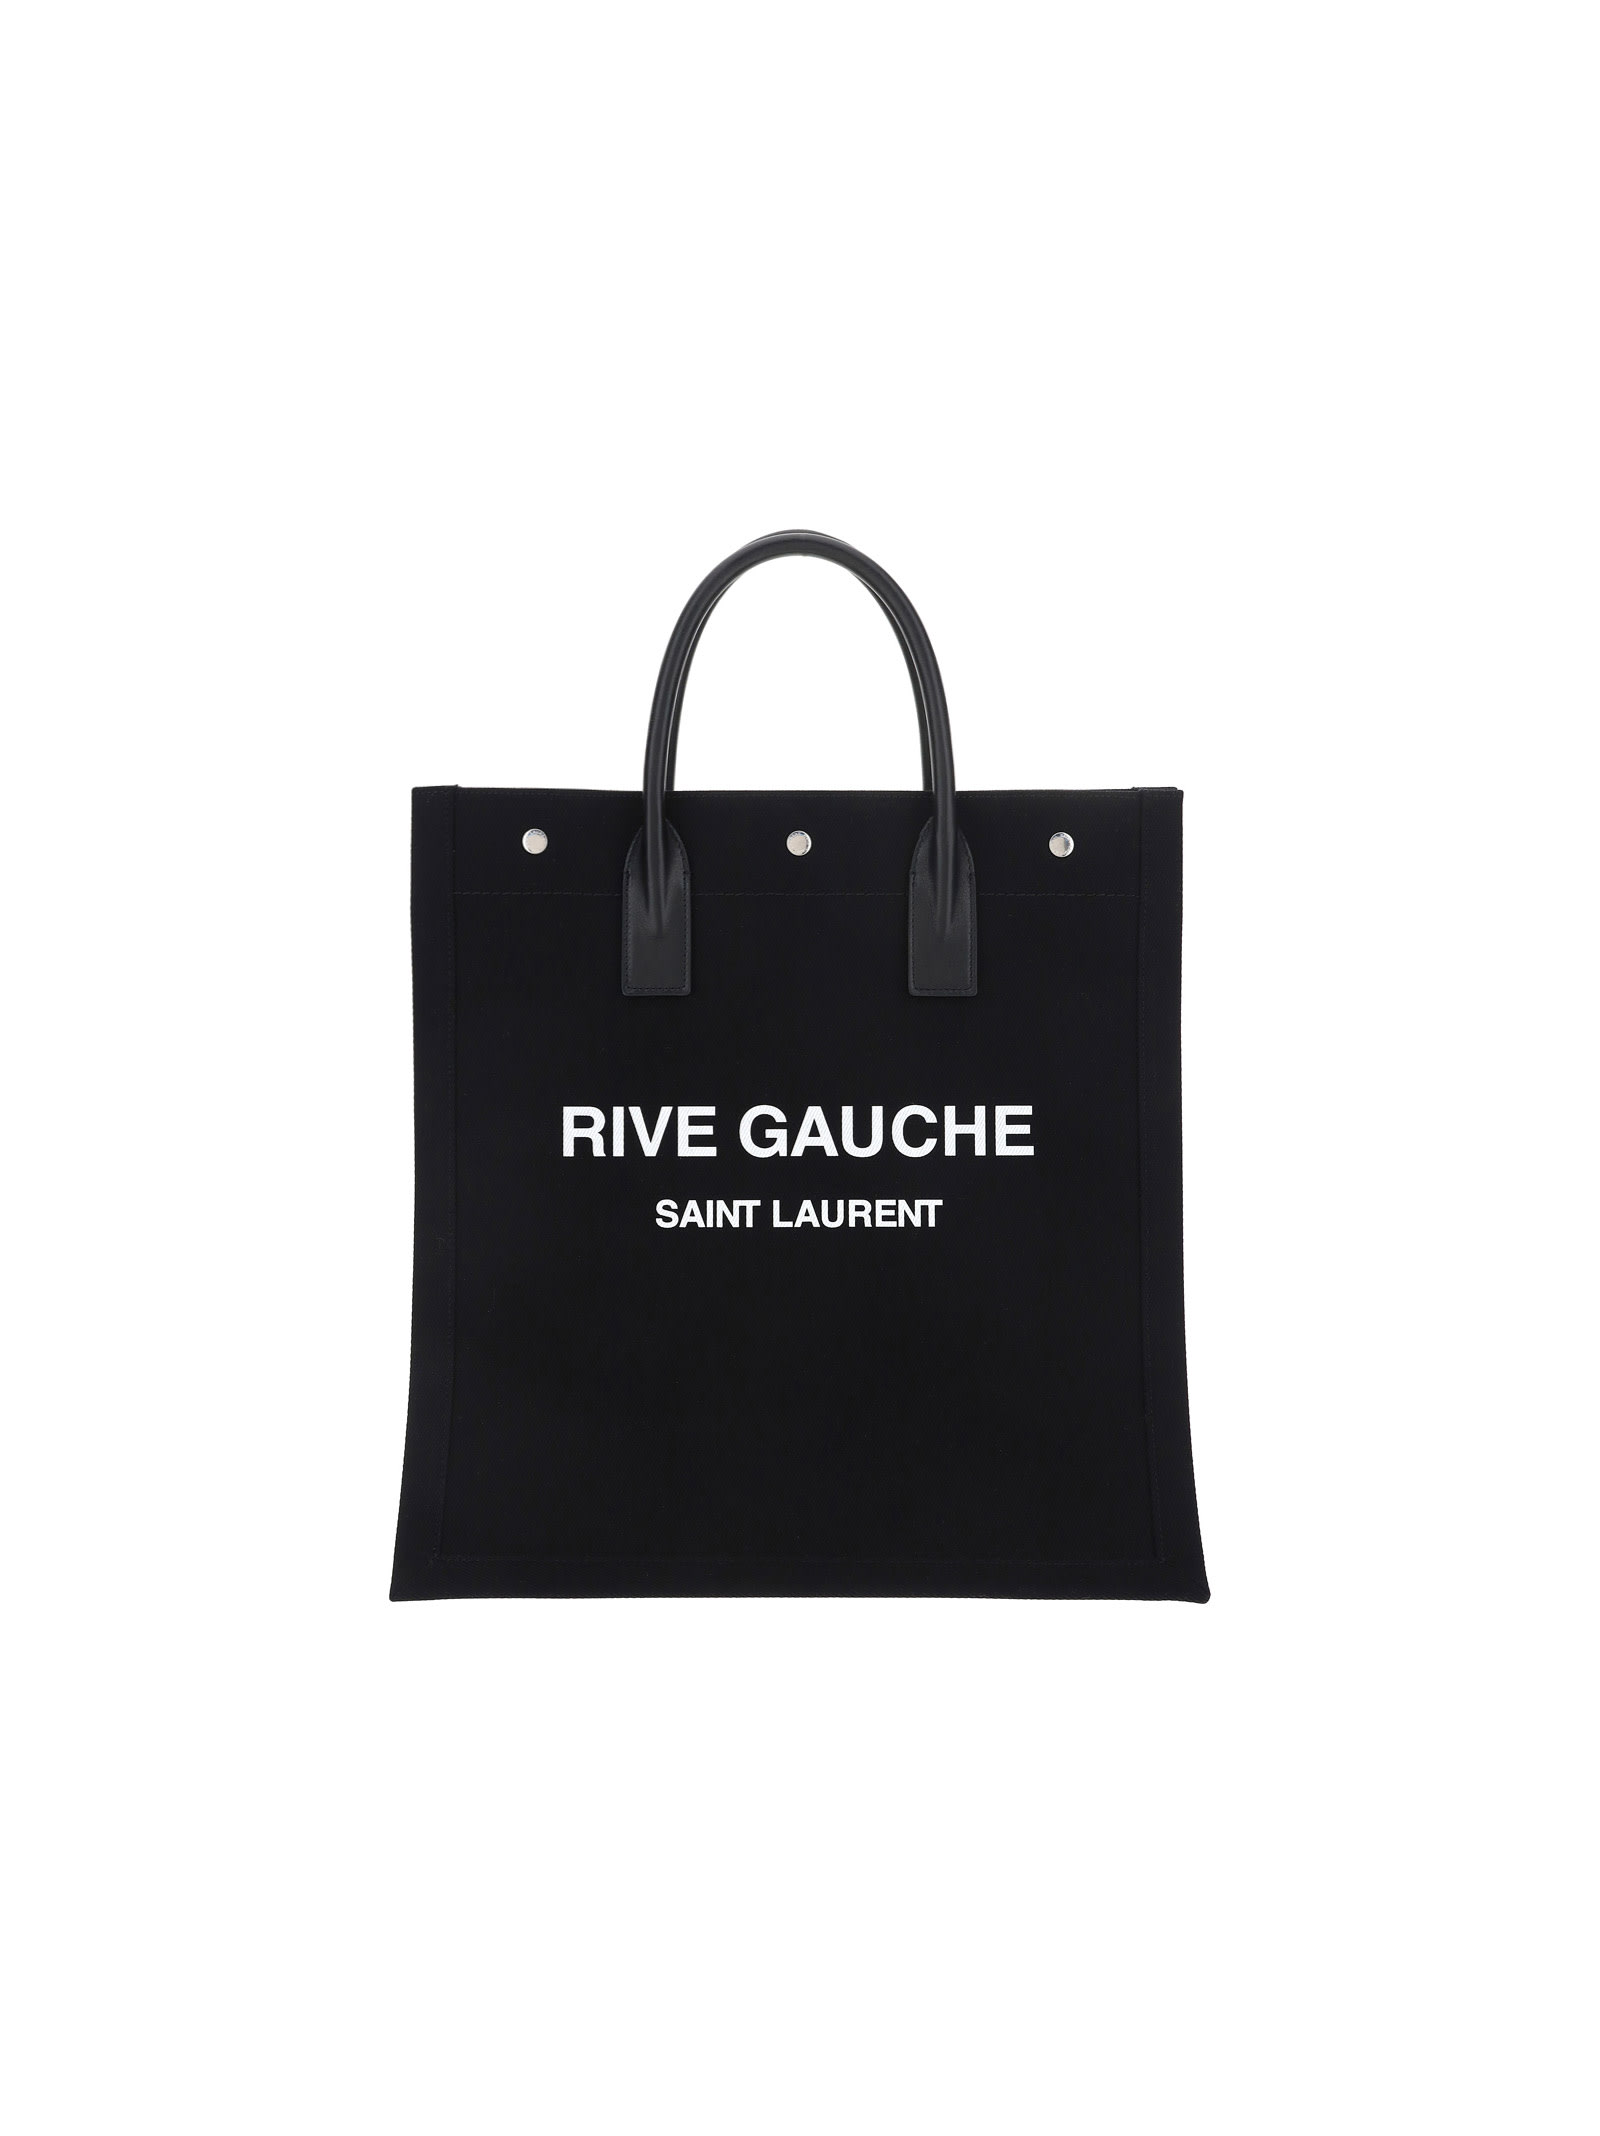 Saint Laurent Paris Handbag